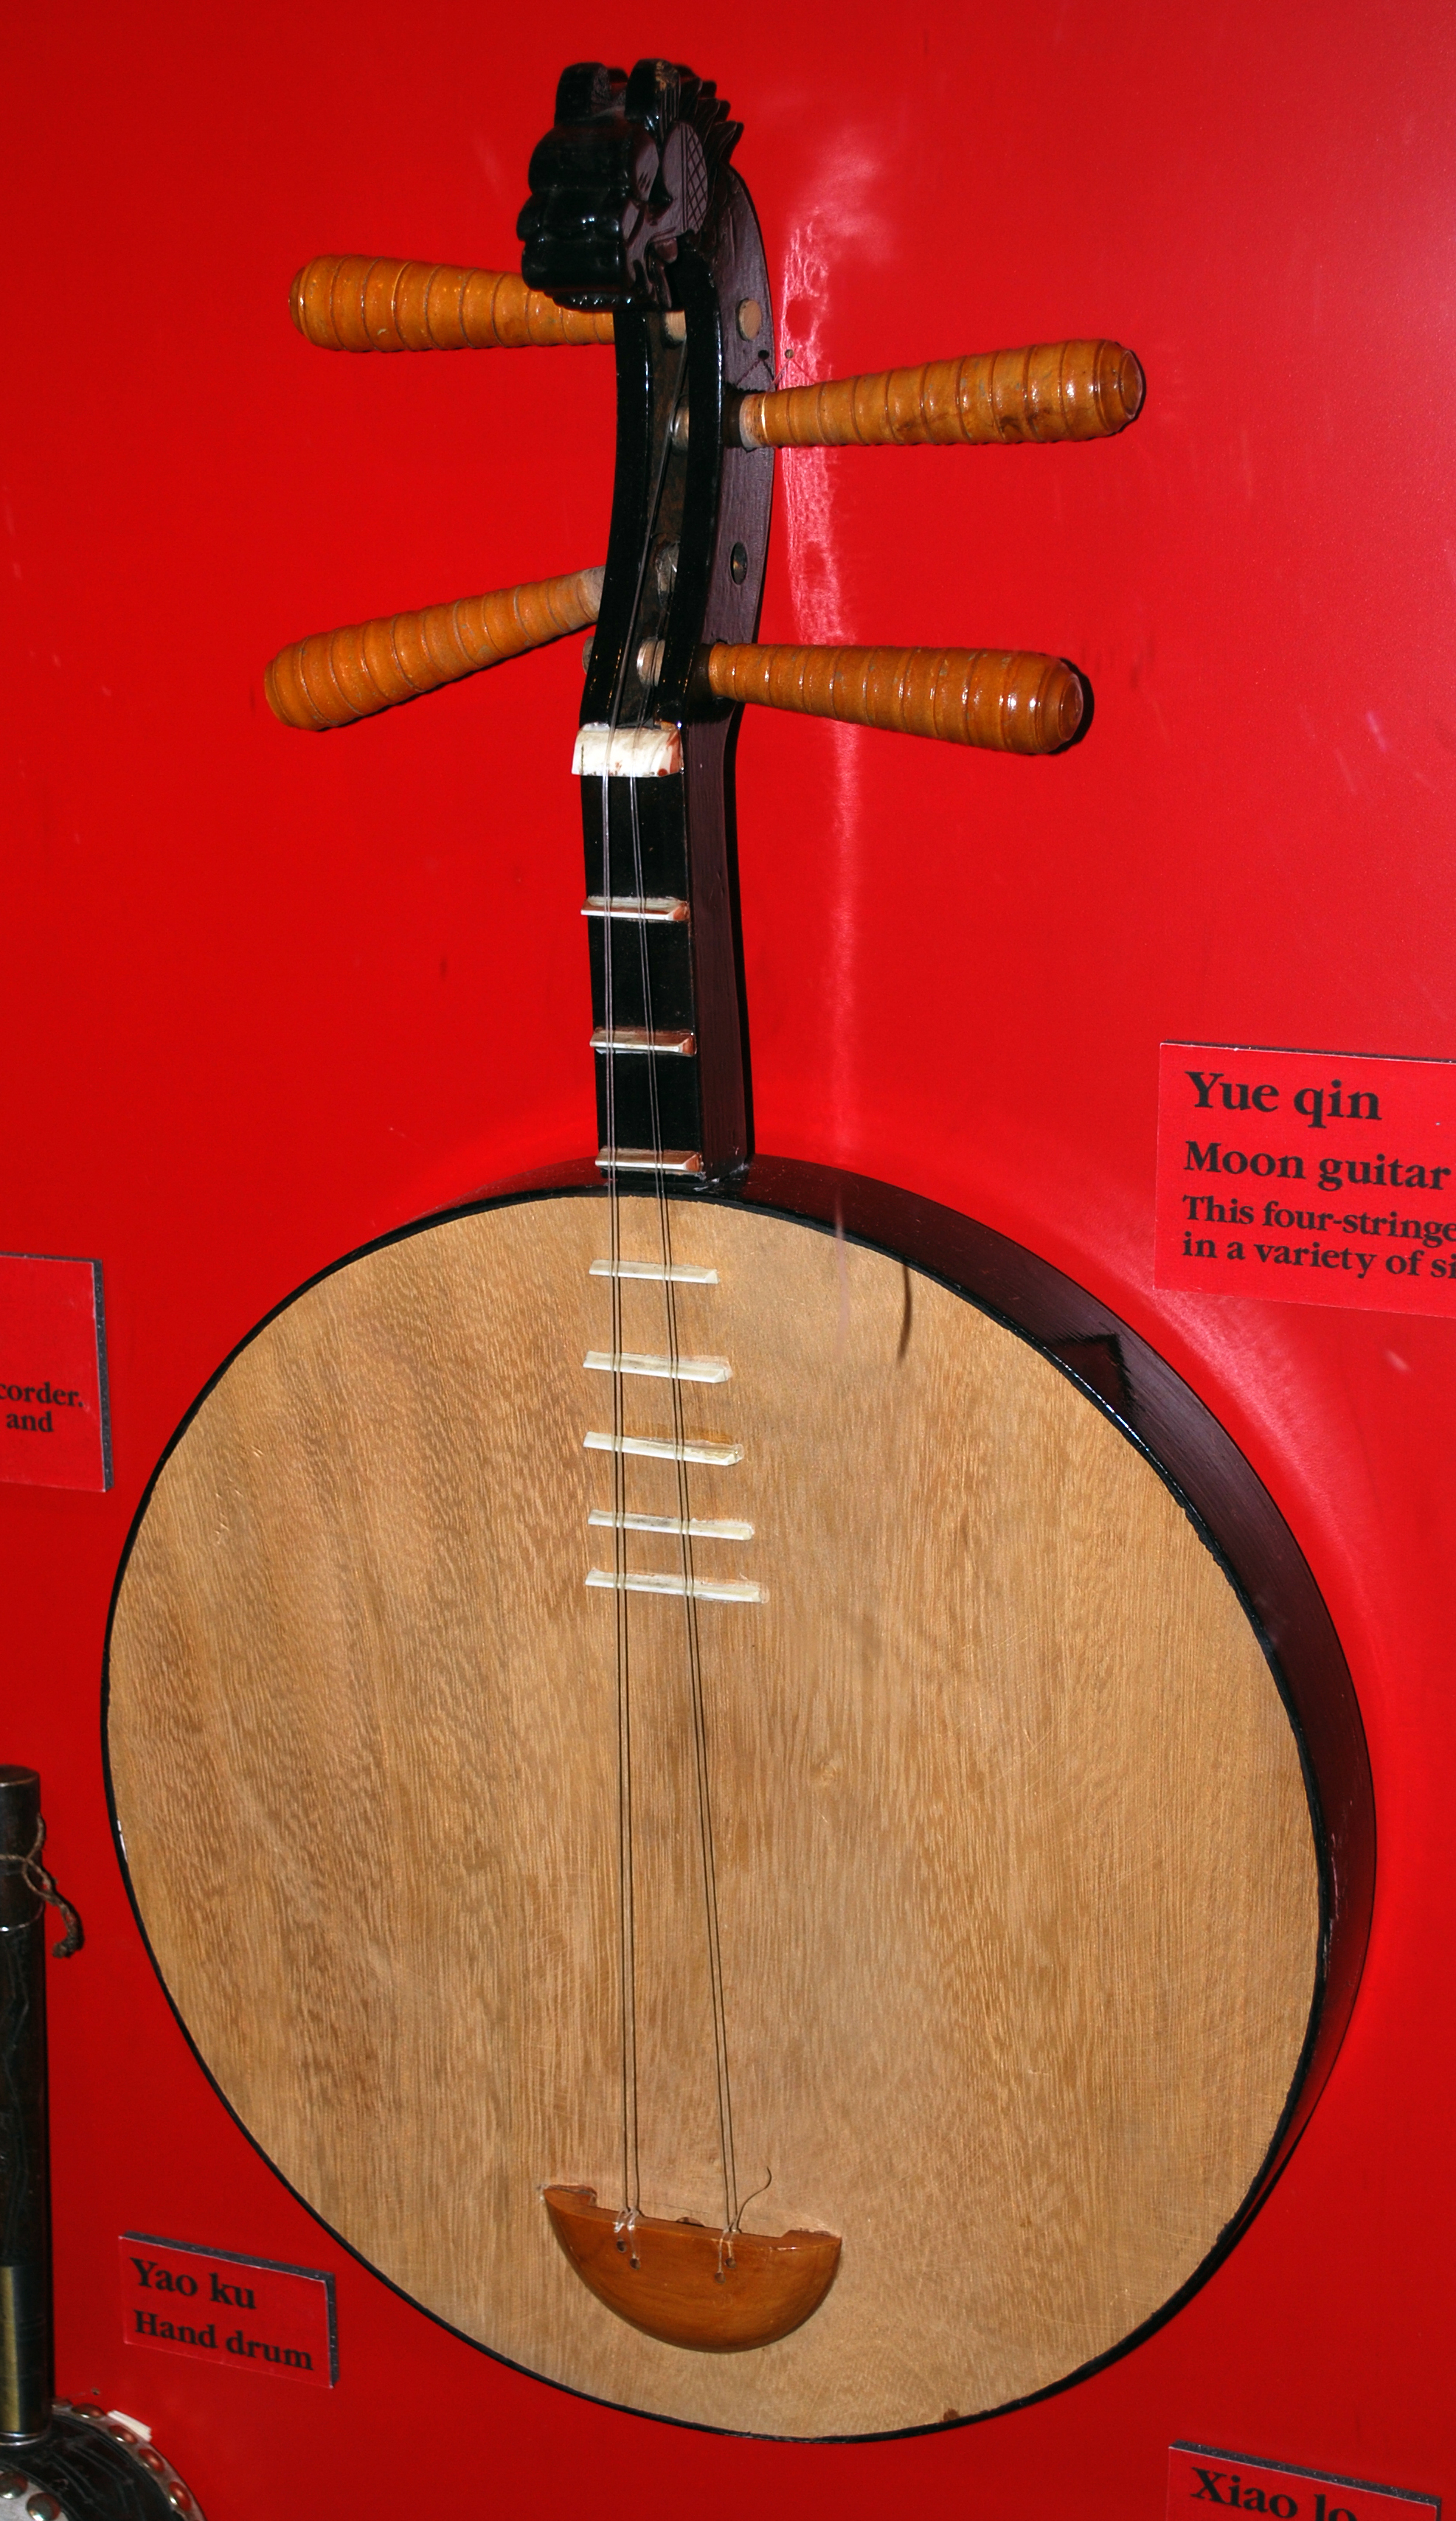 Object: Guitar (yueqin (moon guitar)) | UTSA Institute Of Texan Cultures